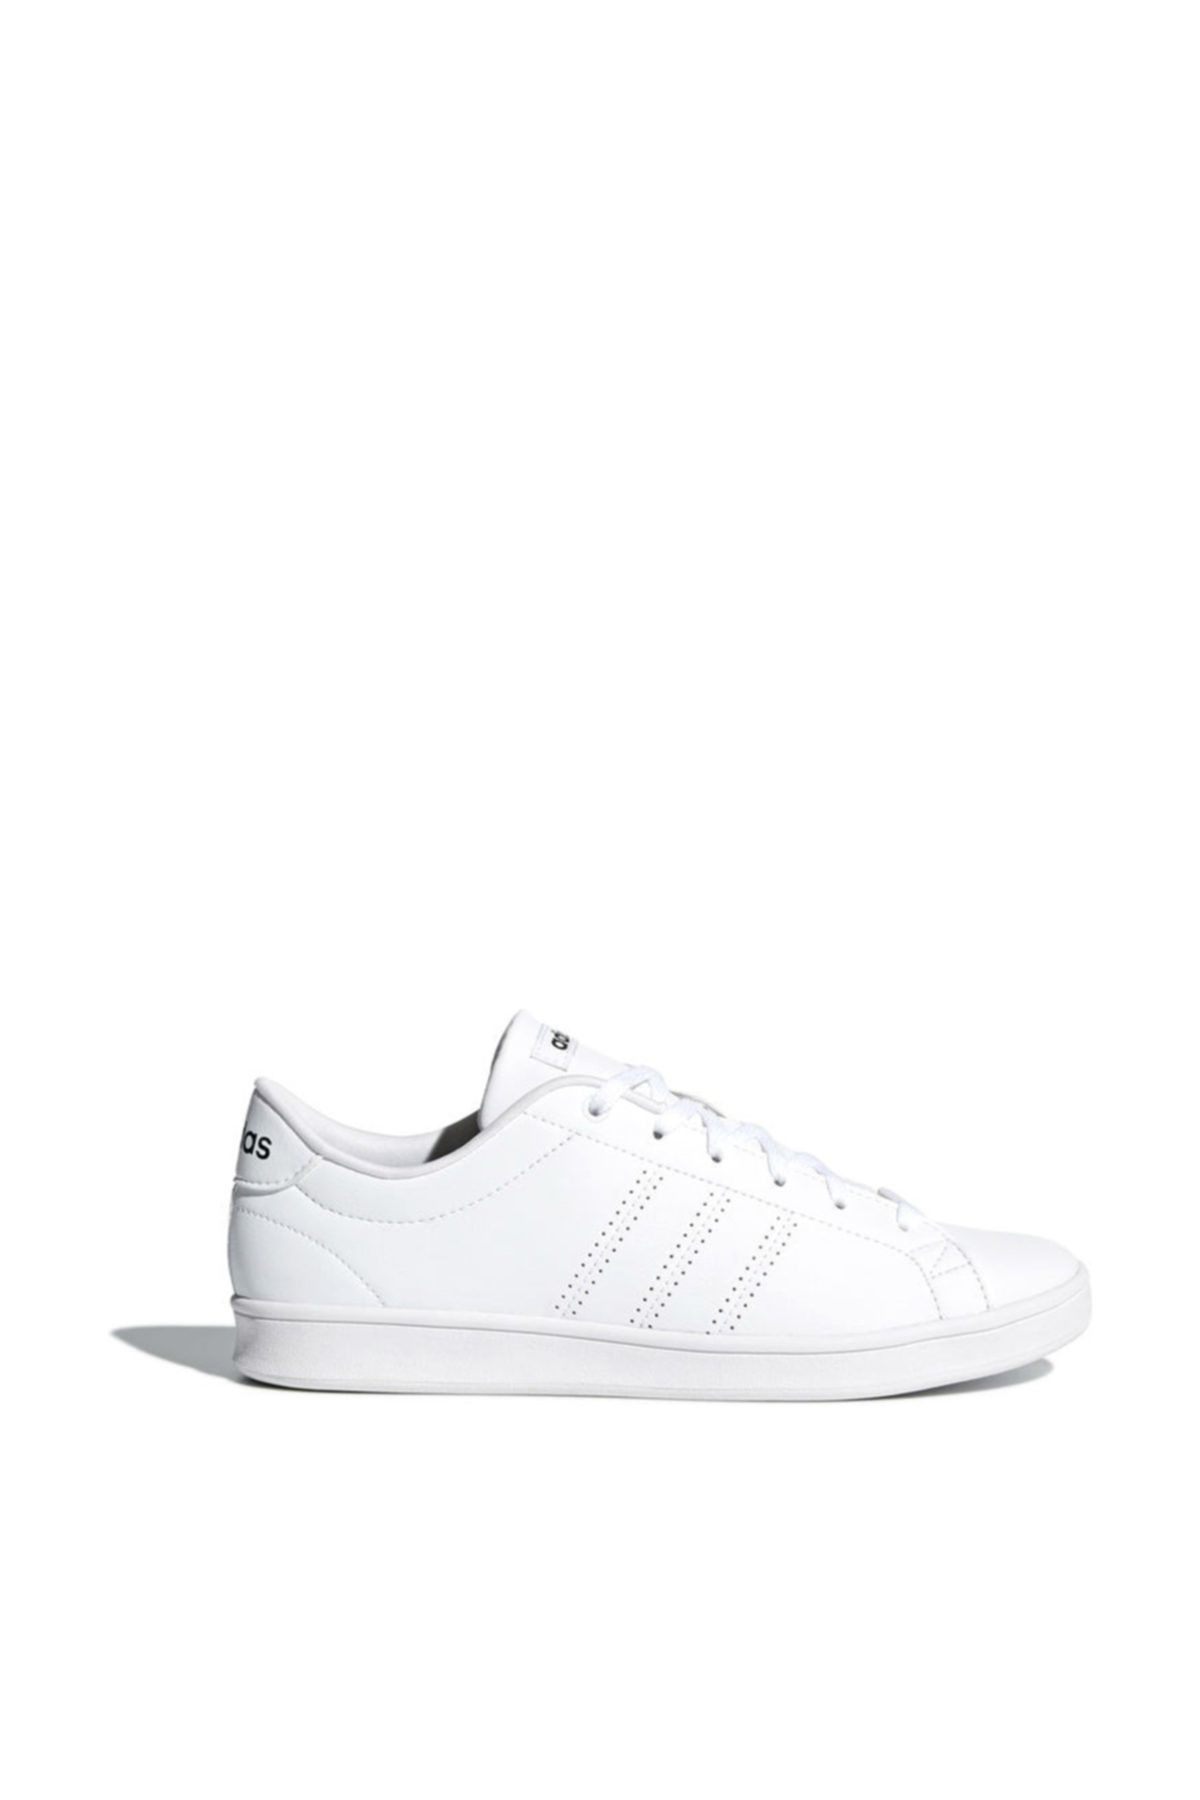 adidas ADVANTAGE CLEAN QT W Beyaz kadin Kalın Tabanlı Sneaker 100662672